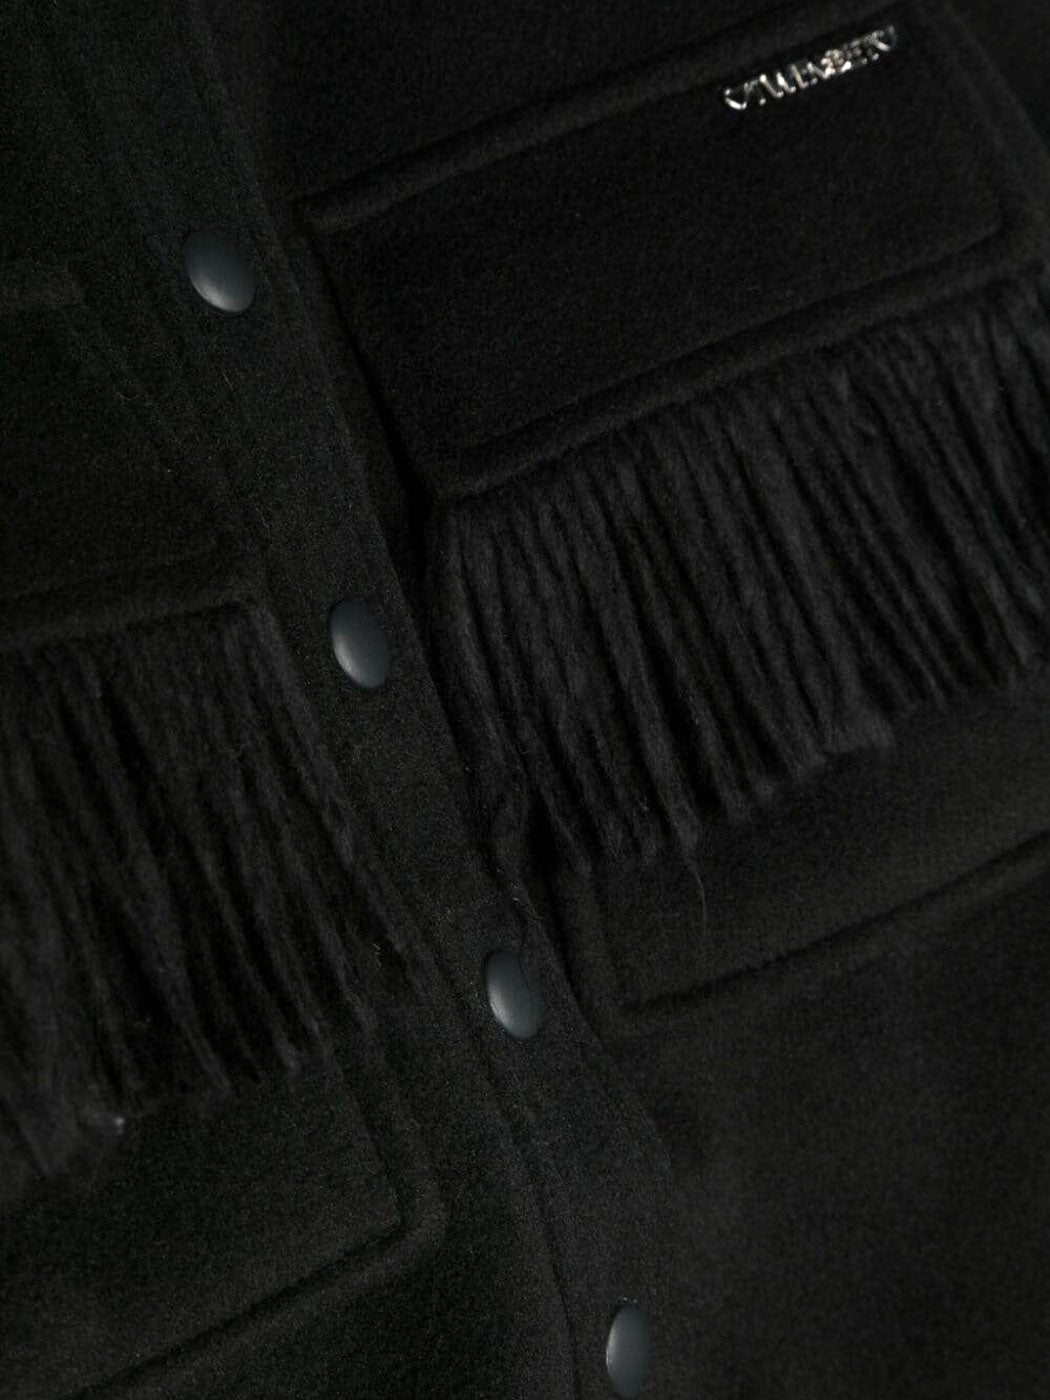 TWINSET Girl's Wool bomber jacket -232GJ2063 black